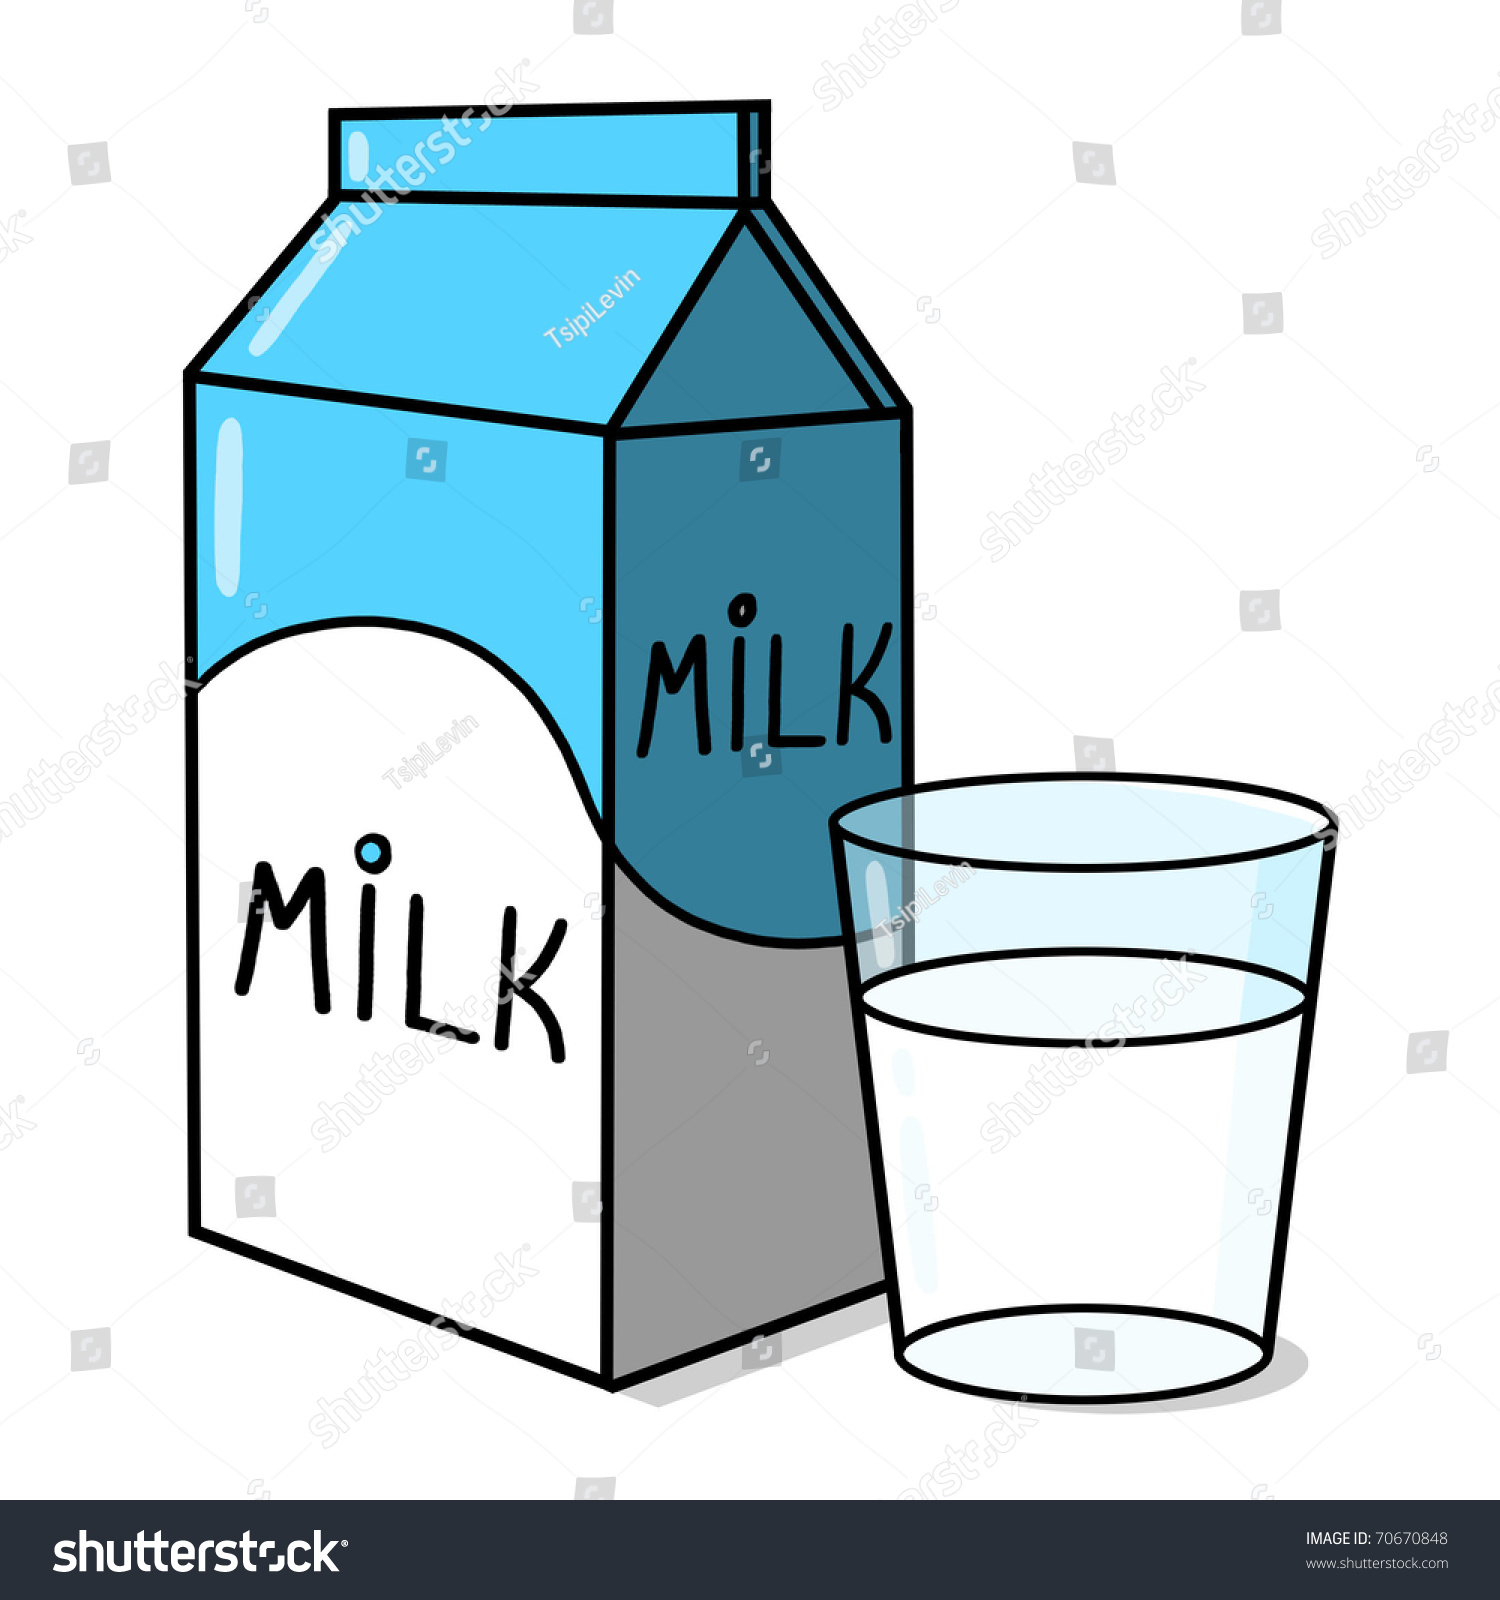 clipart glass of milk - photo #34